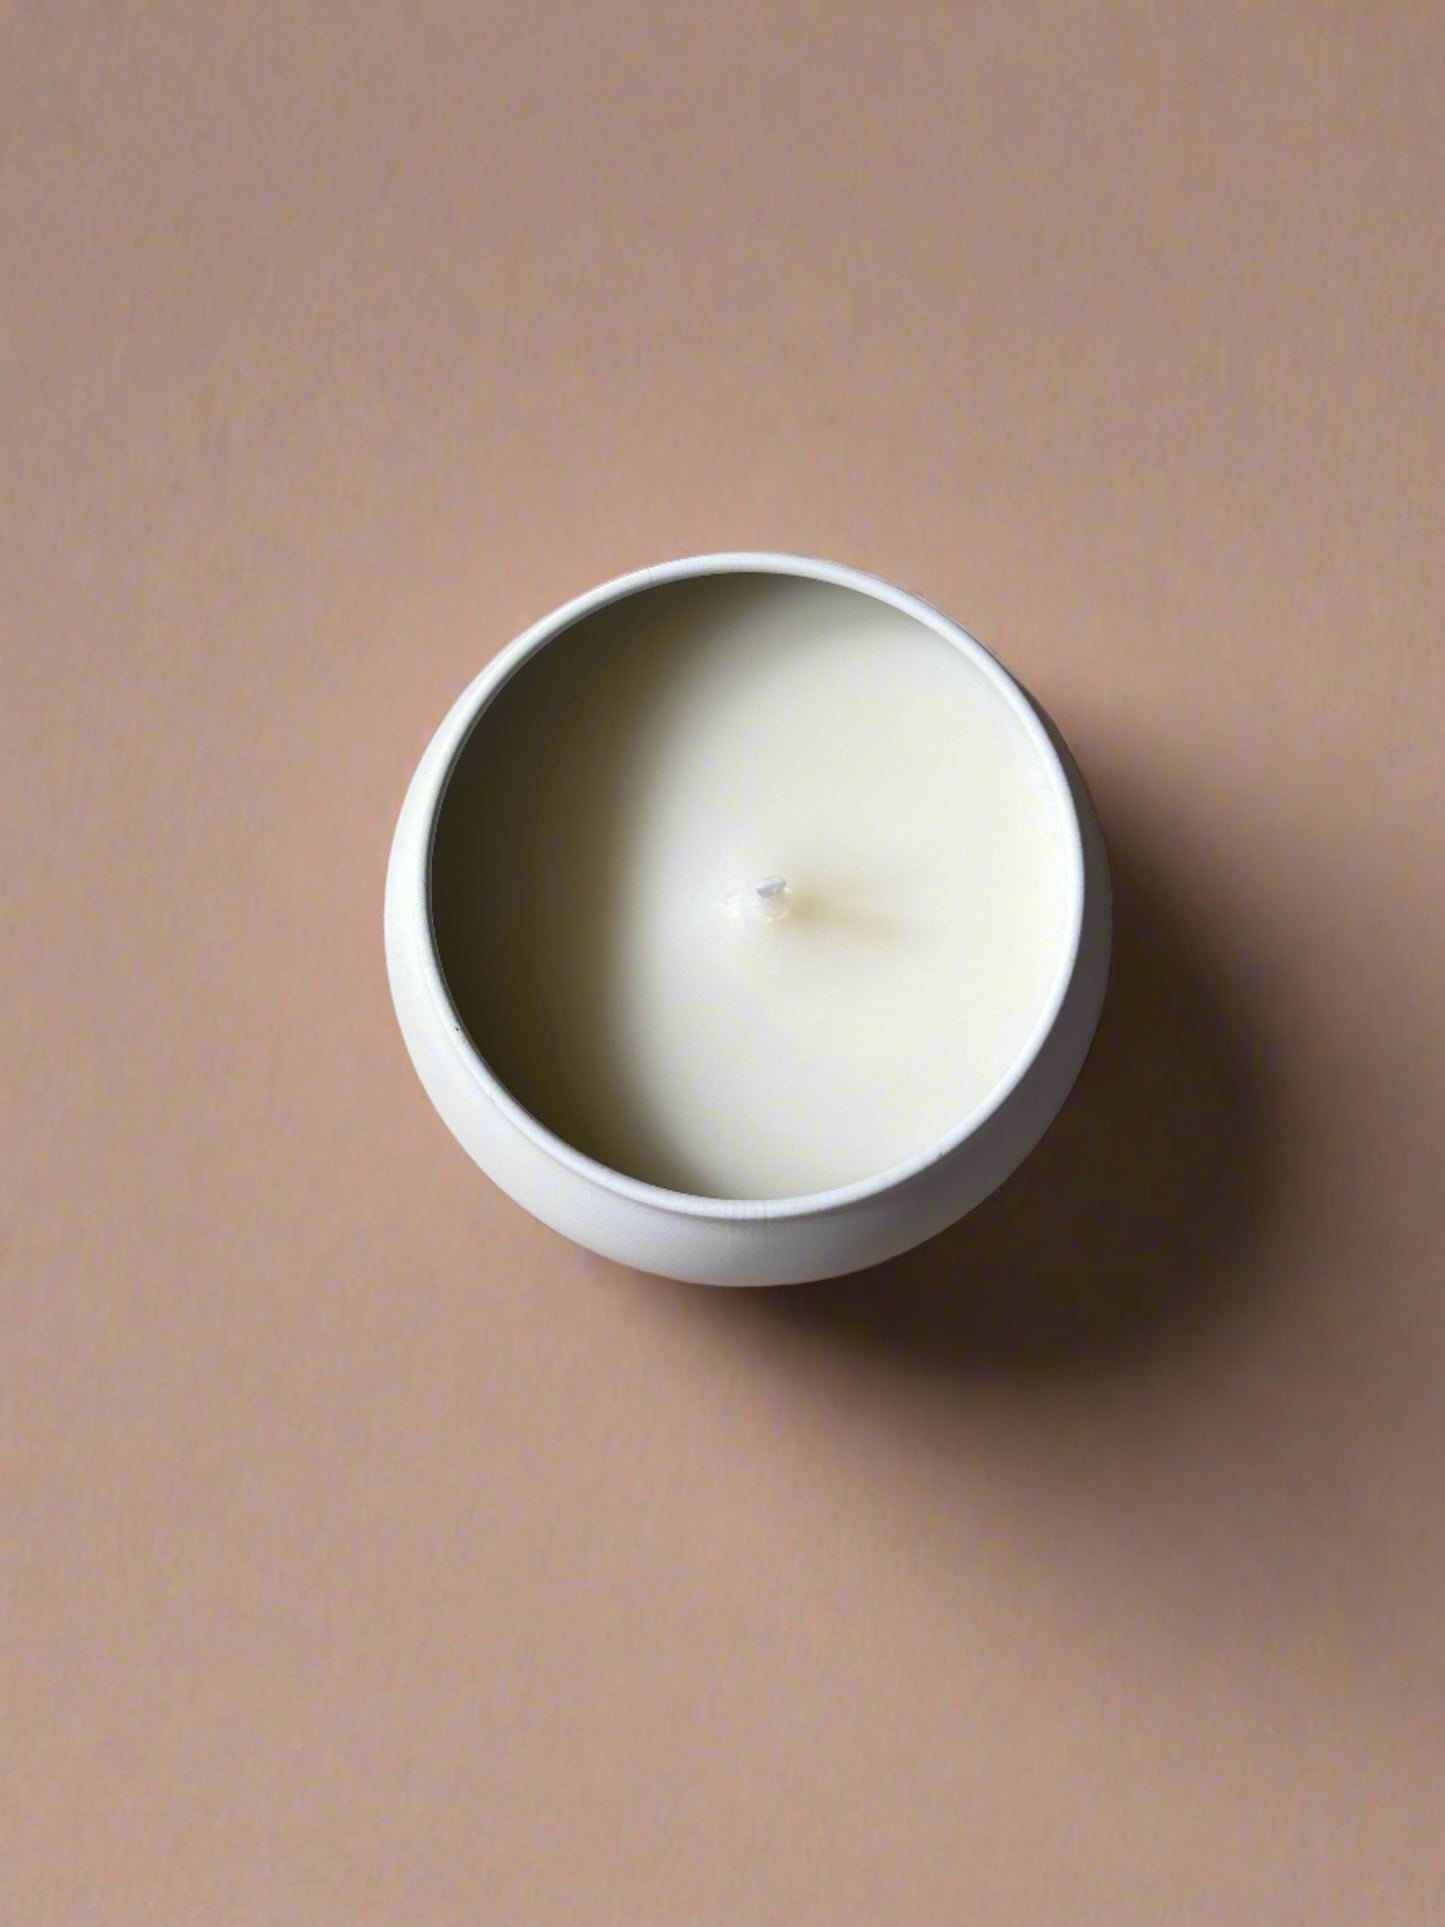 Vanilla Oak Mini Candle - 4 oz (wholesale)